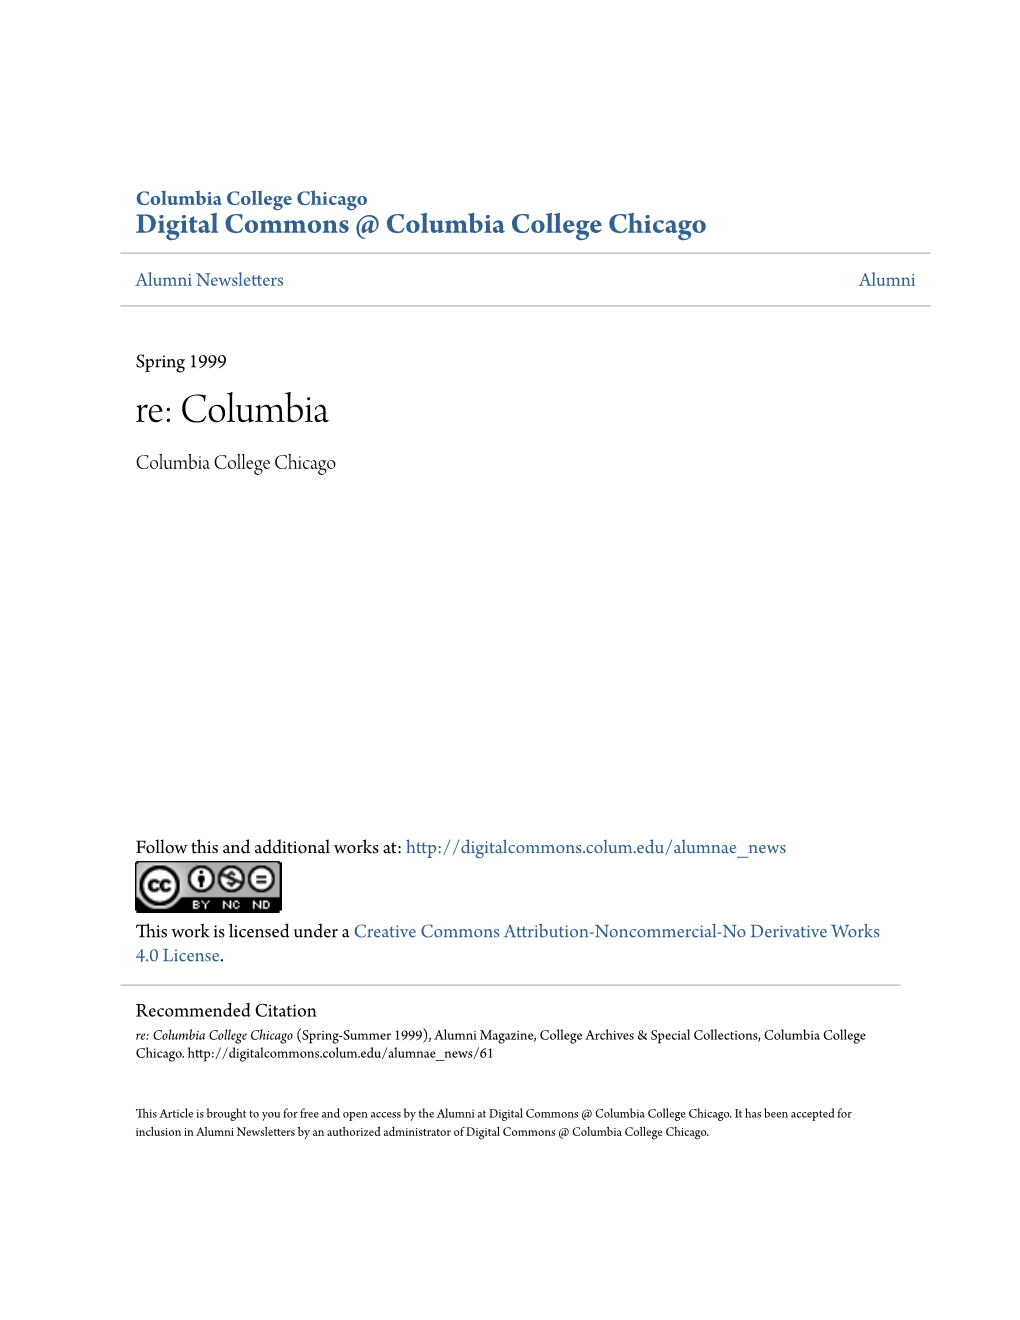 Re: Columbia Columbia College Chicago